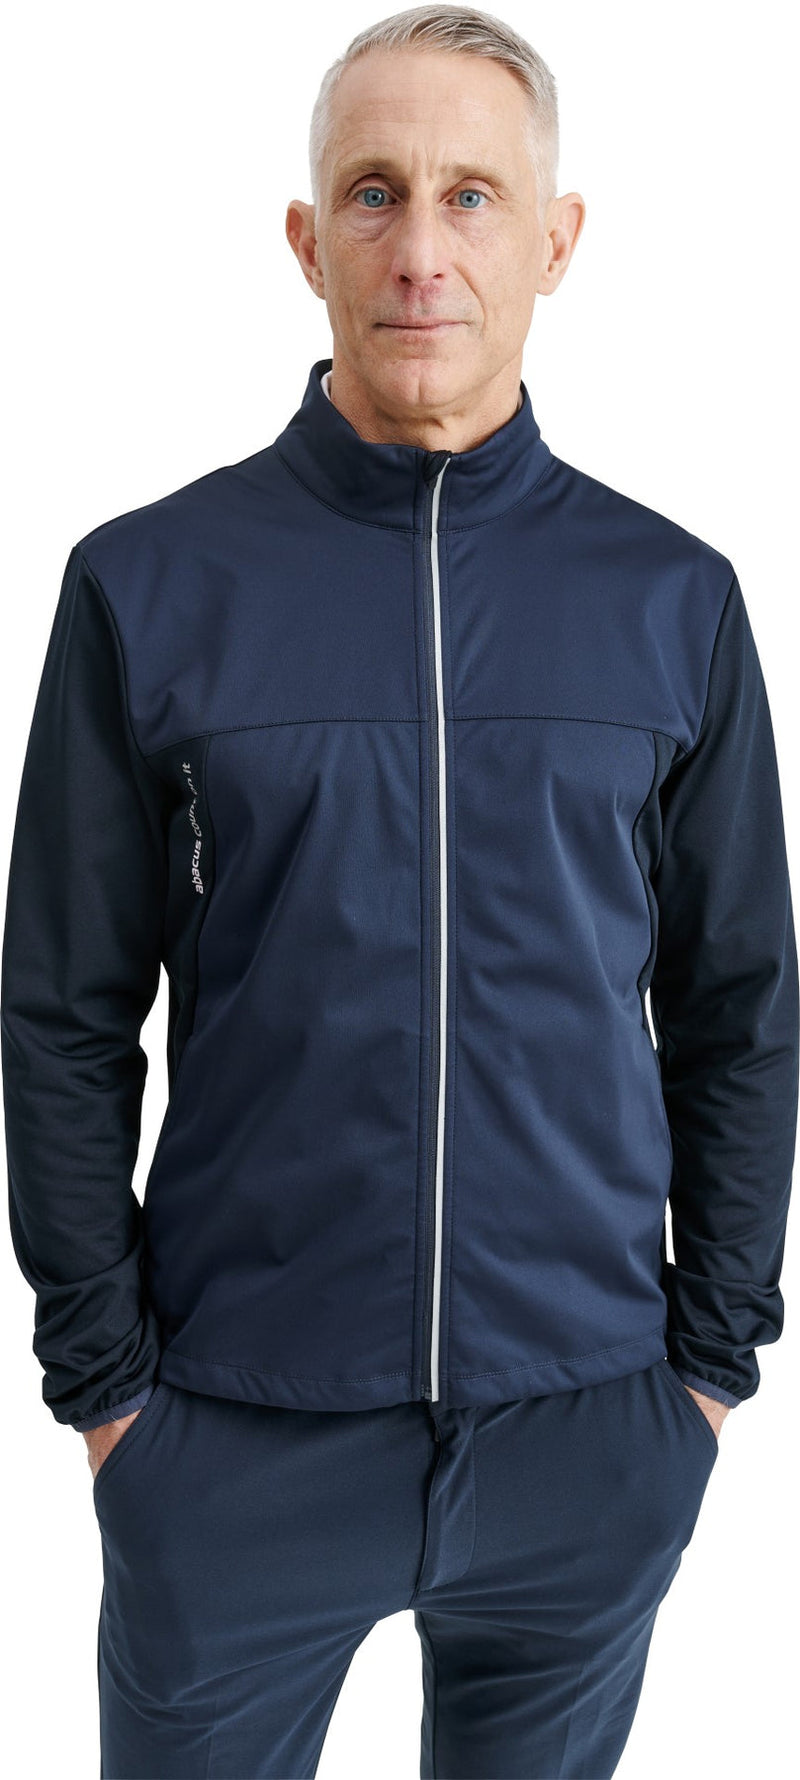 Abacus Sports Wear: Men's Softshell Hybrid Jacket - Dornoch